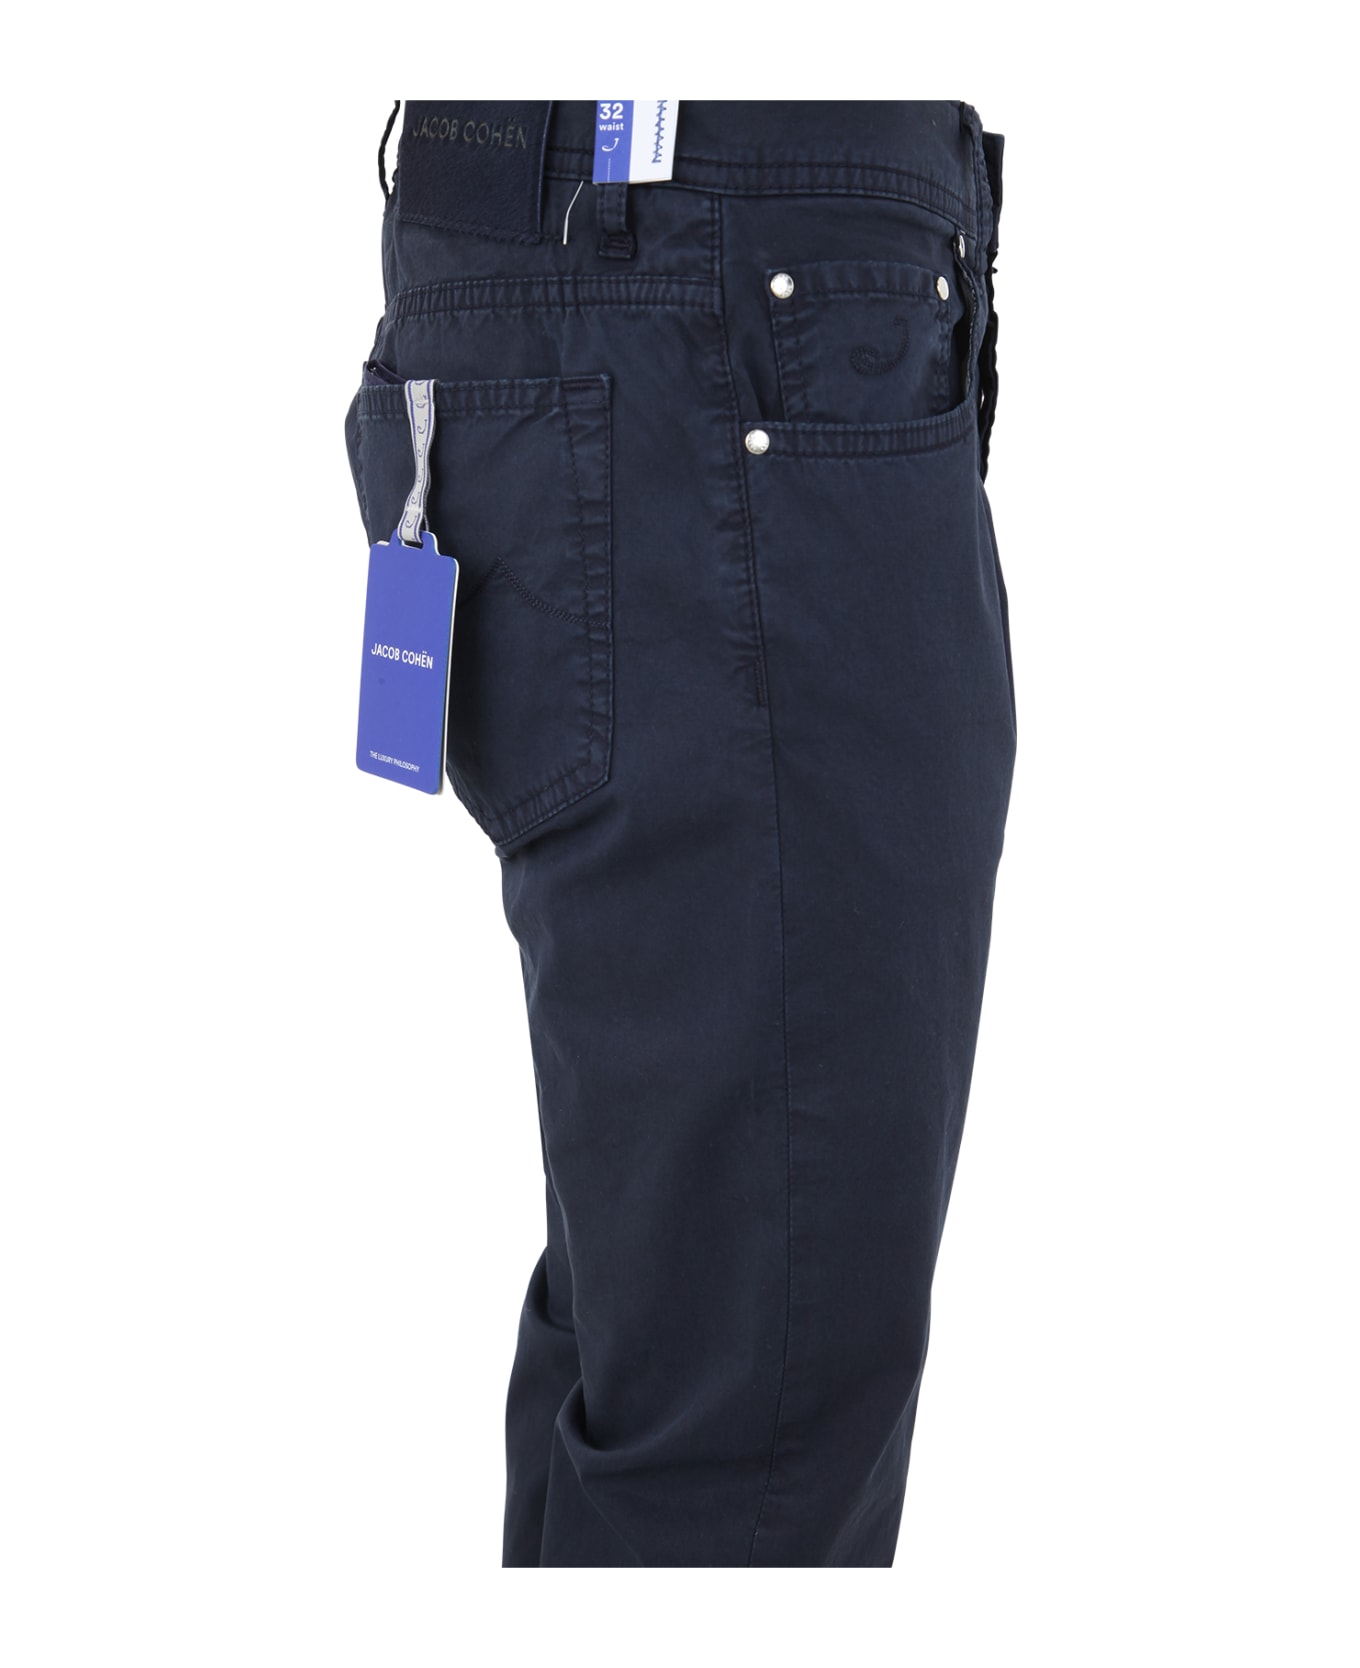 Jacob Cohen Bard Slim Fit Five Pocket Jeans - Navy Blue